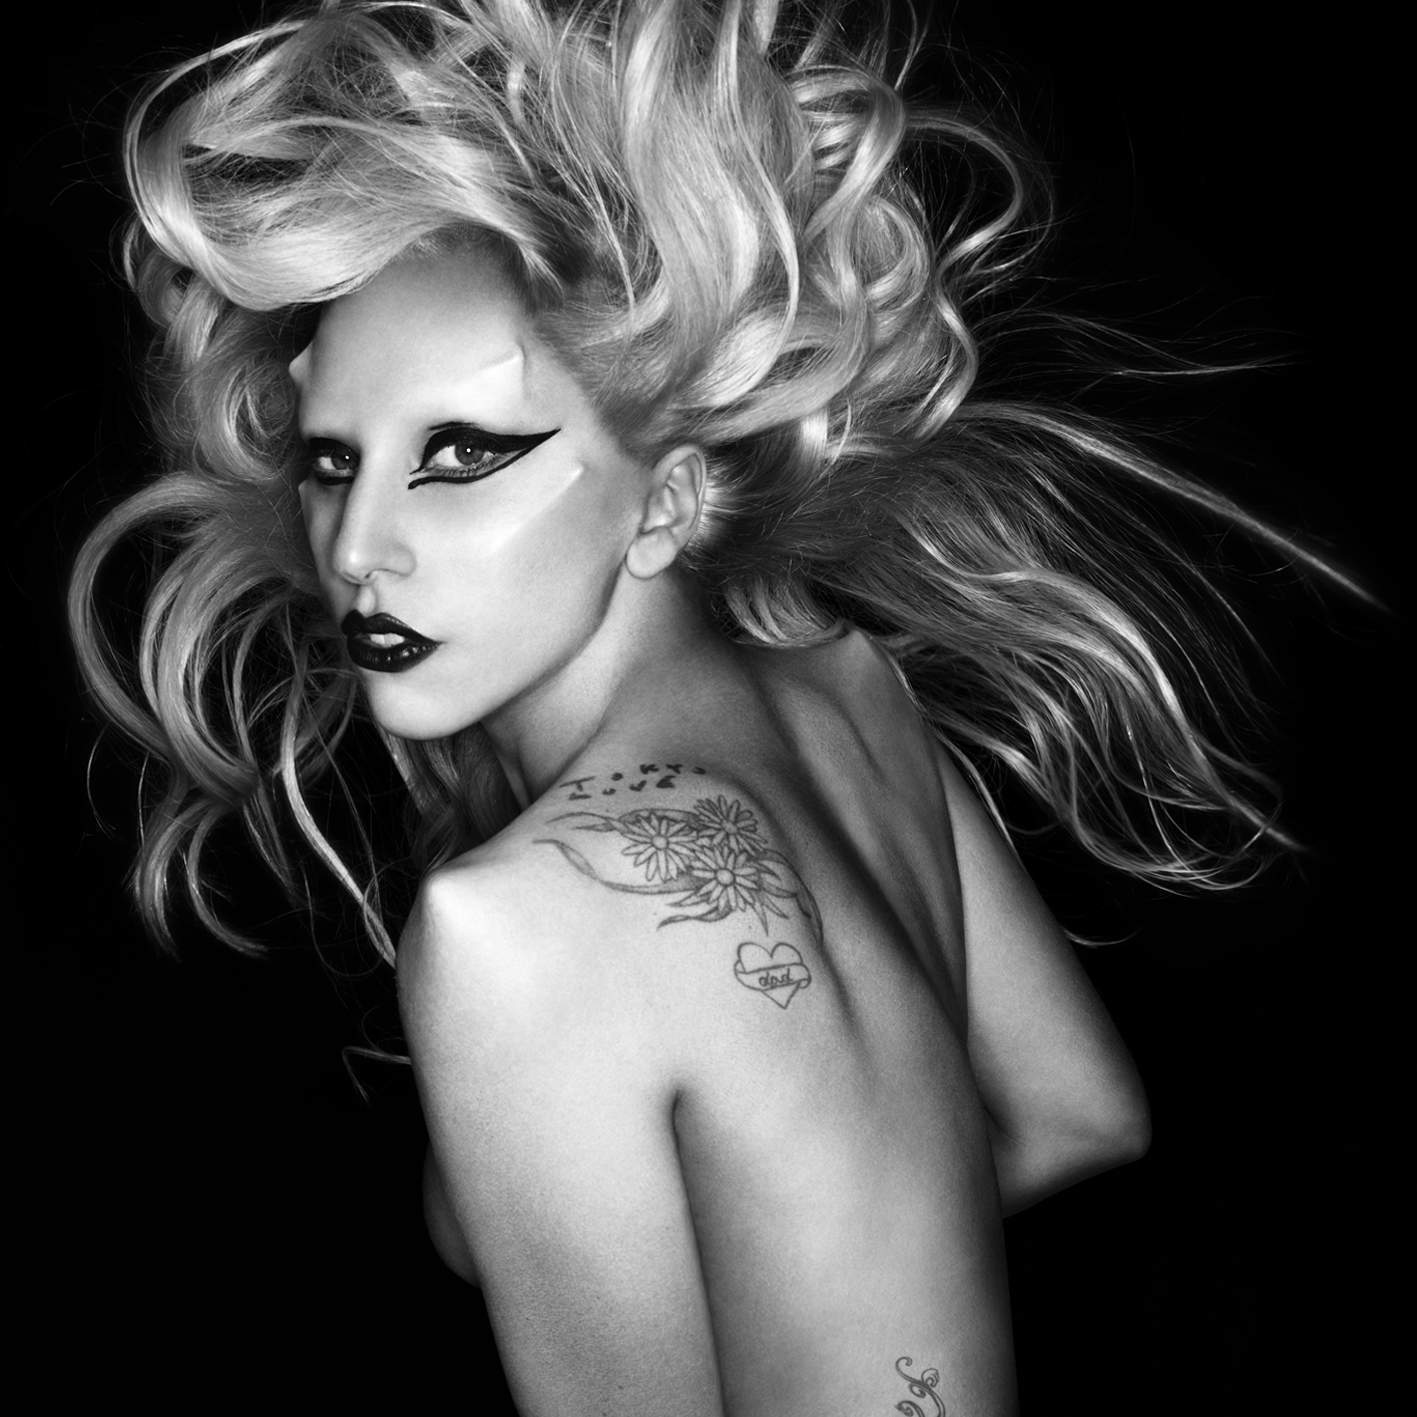 "Born This Way" photoshoot by Nick Knight - lady-gaga photo